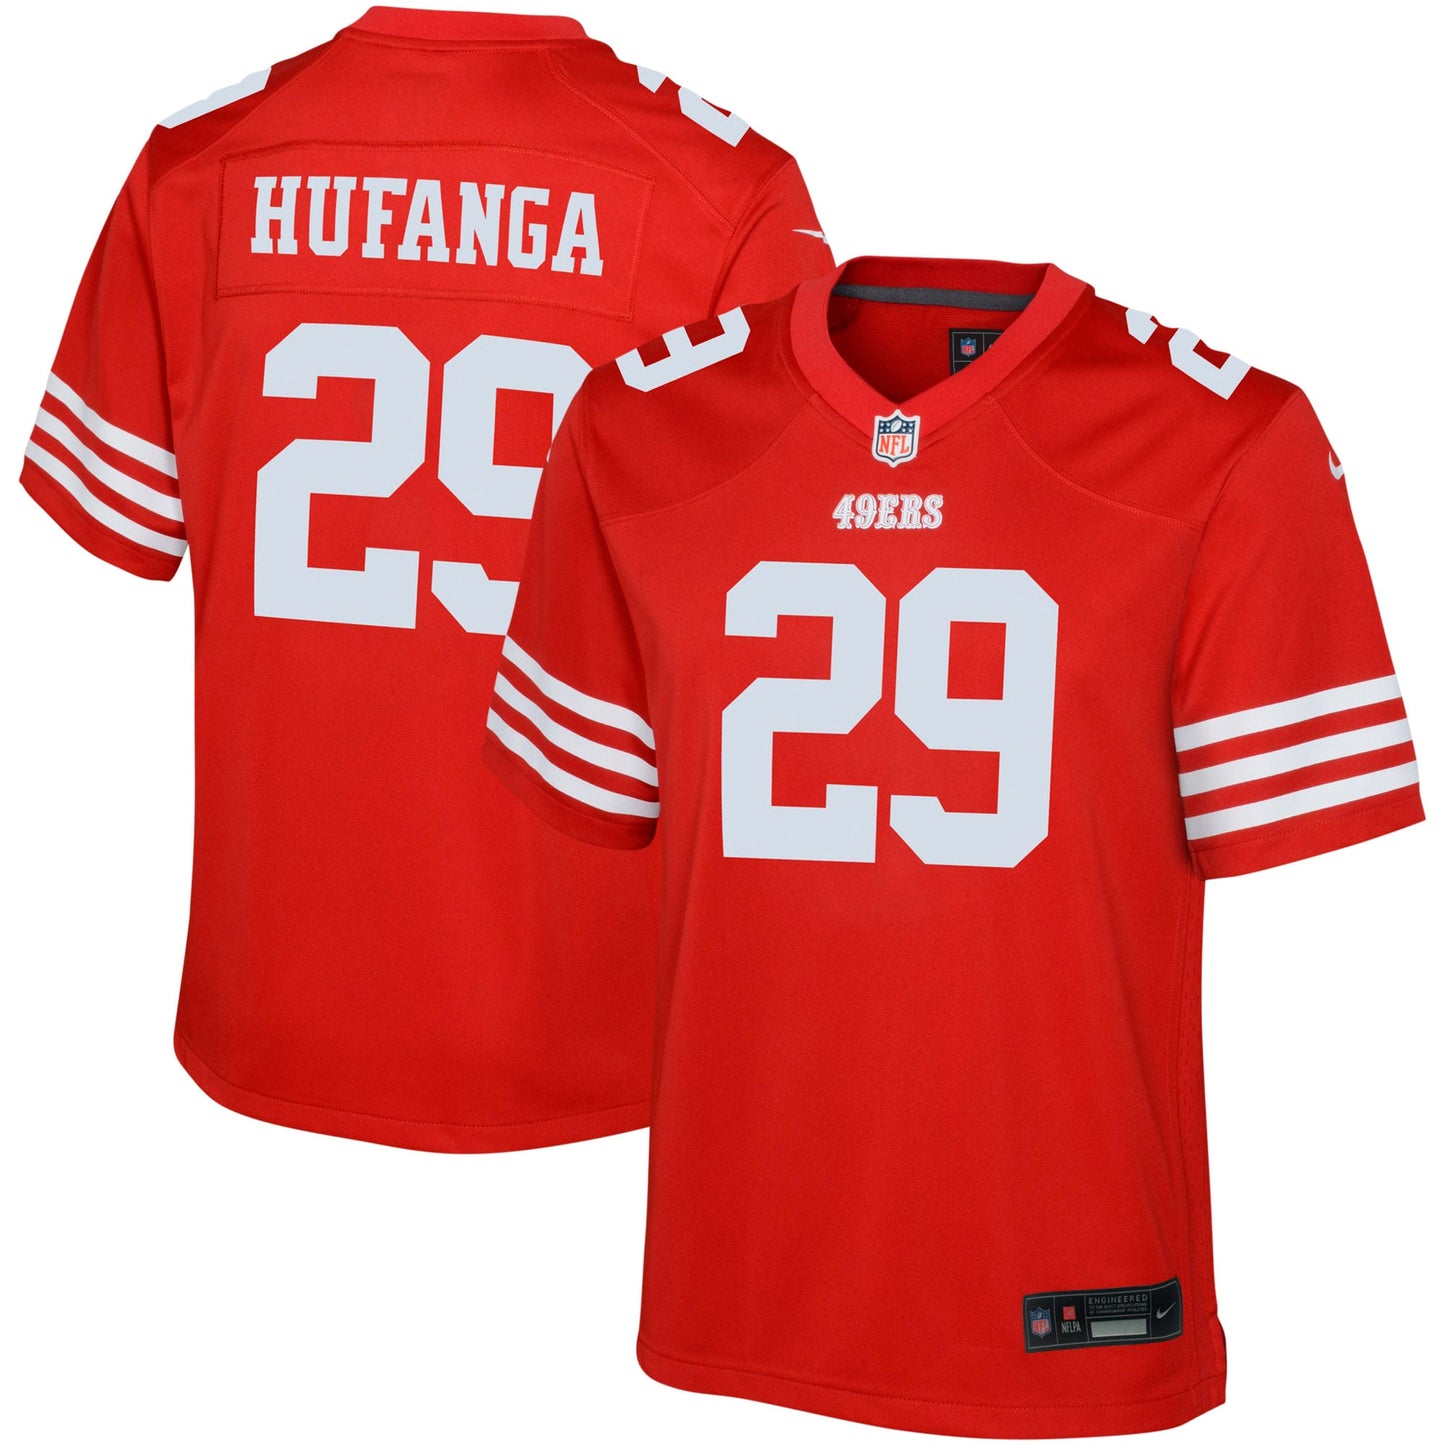 Talanoa Hufanga San Francisco 49ers Nike Youth Game Jersey - Scarlet